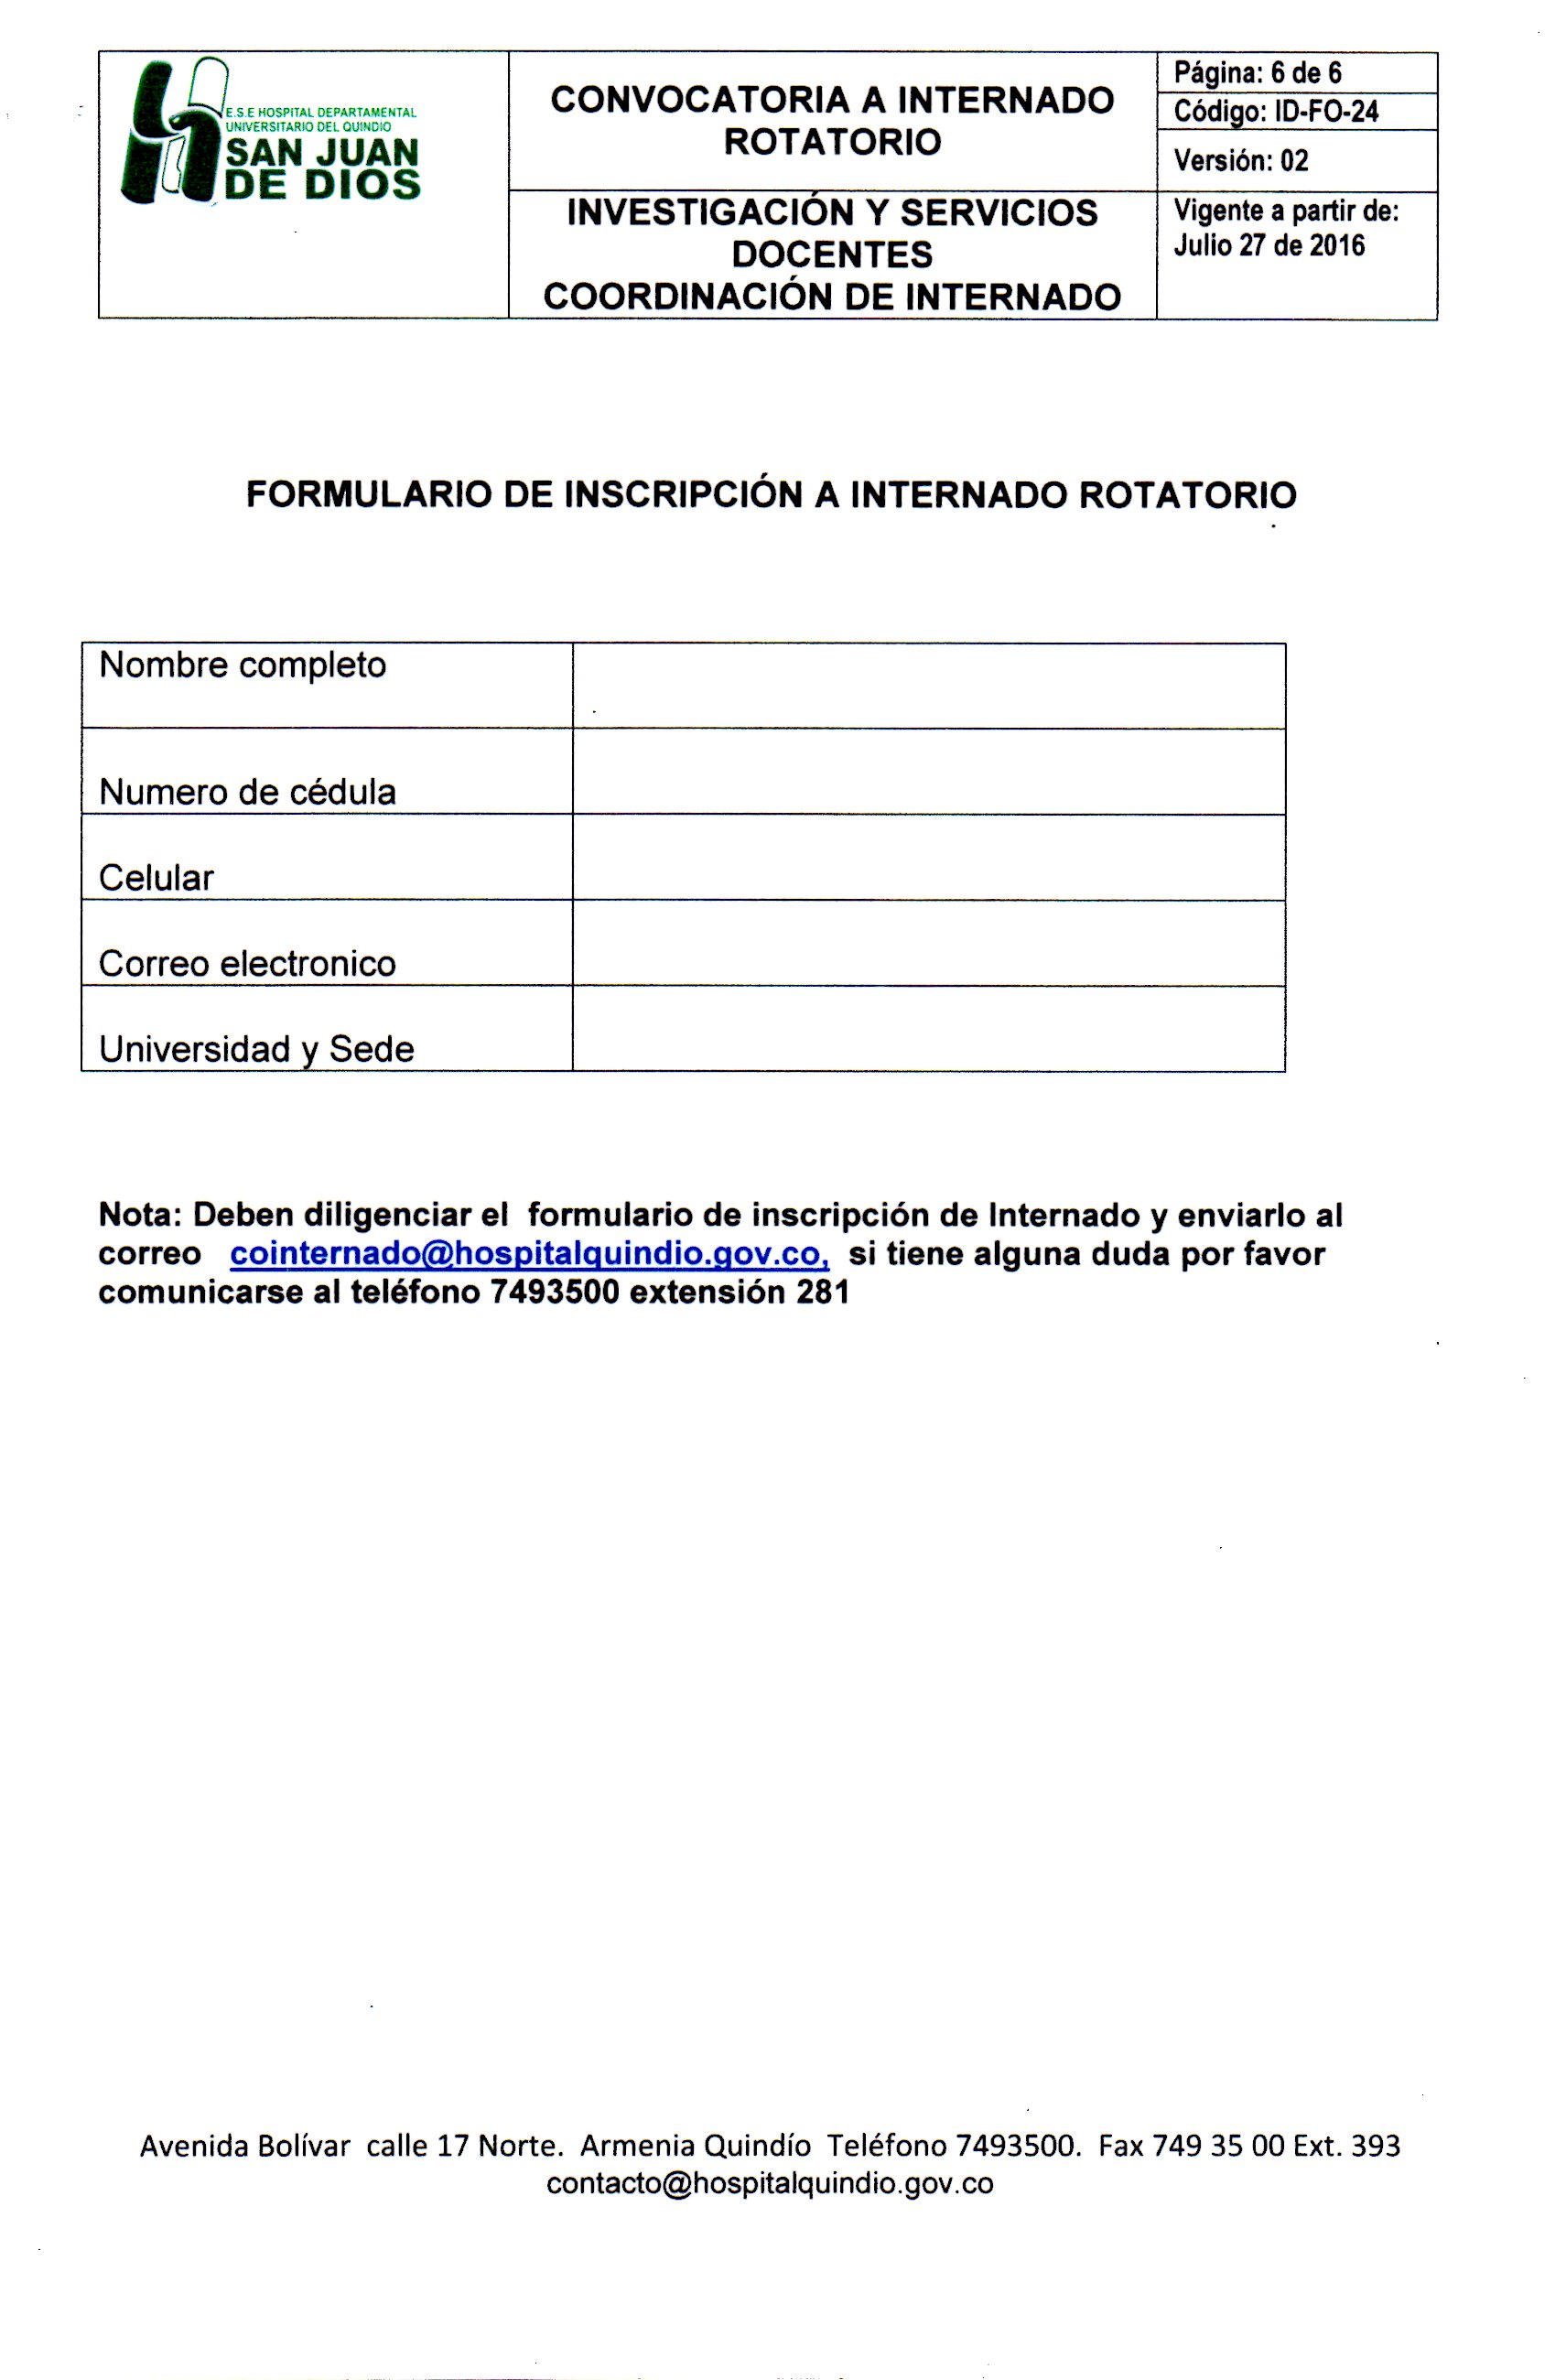 FORMULARIO_DE_INSCRIPCION_A_INTERNADO_ROTATORIO286.jpg